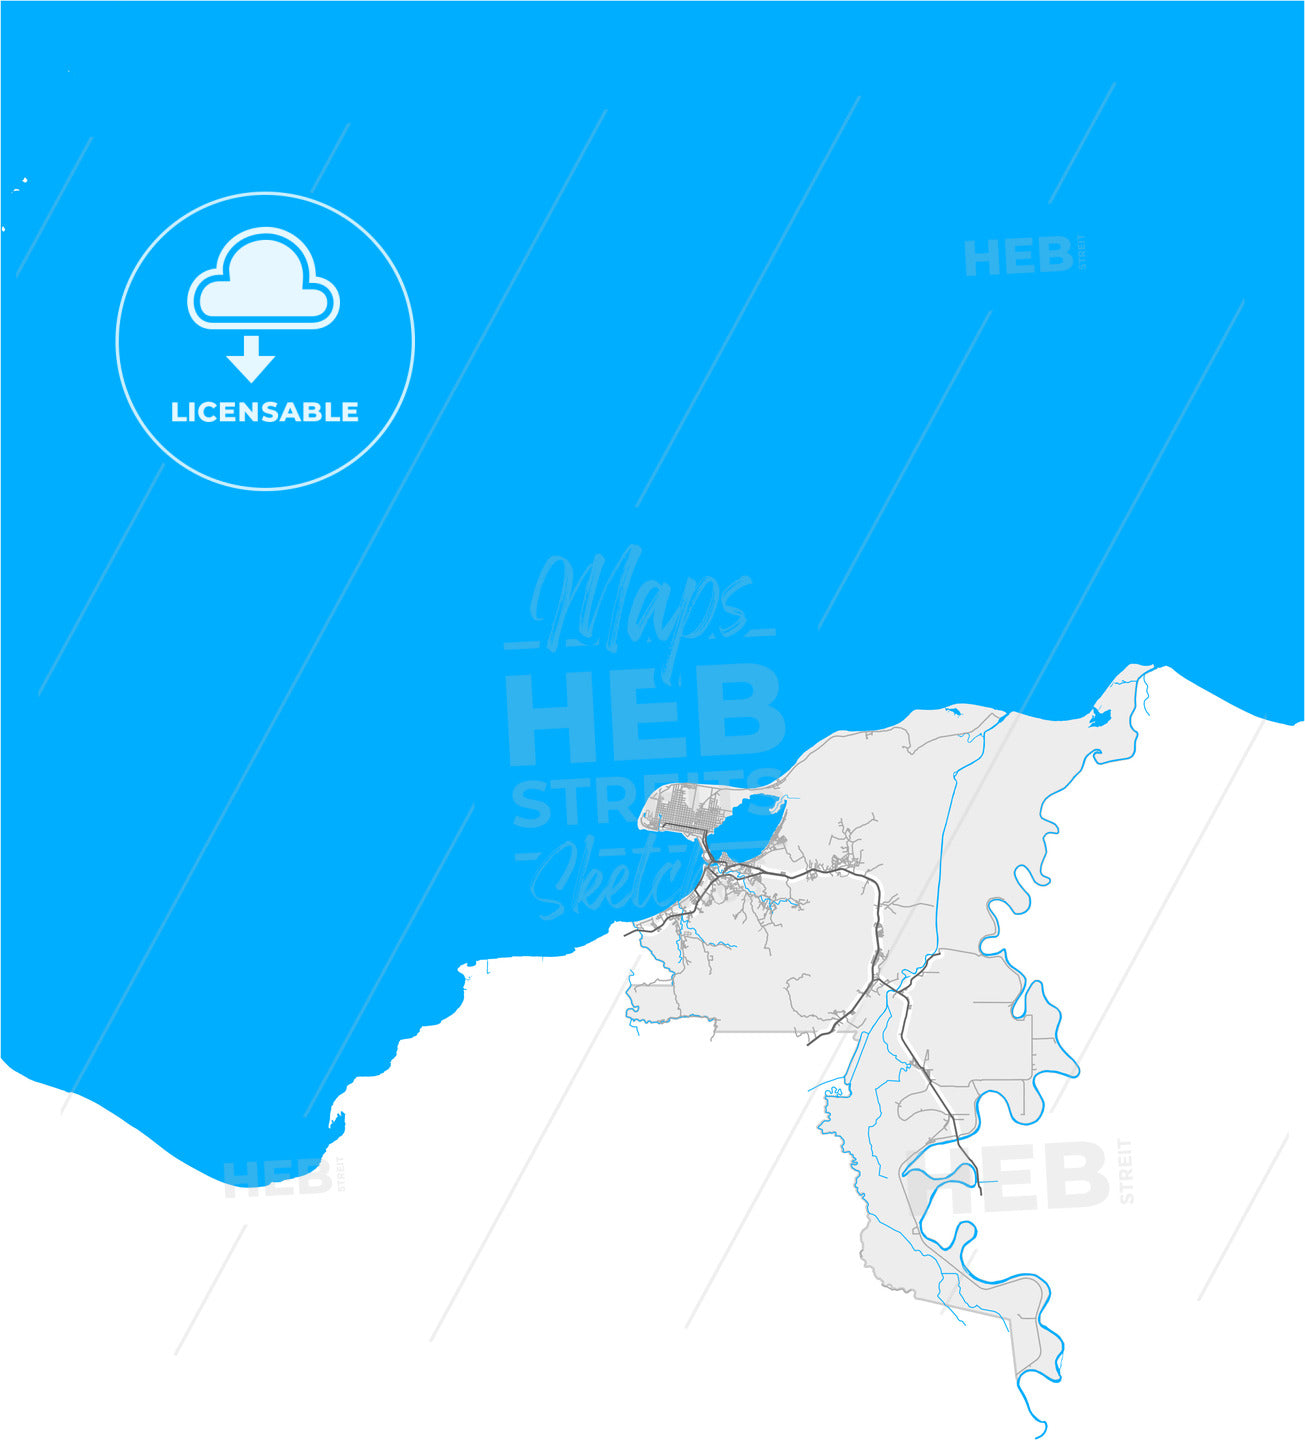 Puerto Cortés, Cortés, Honduras, high quality vector map